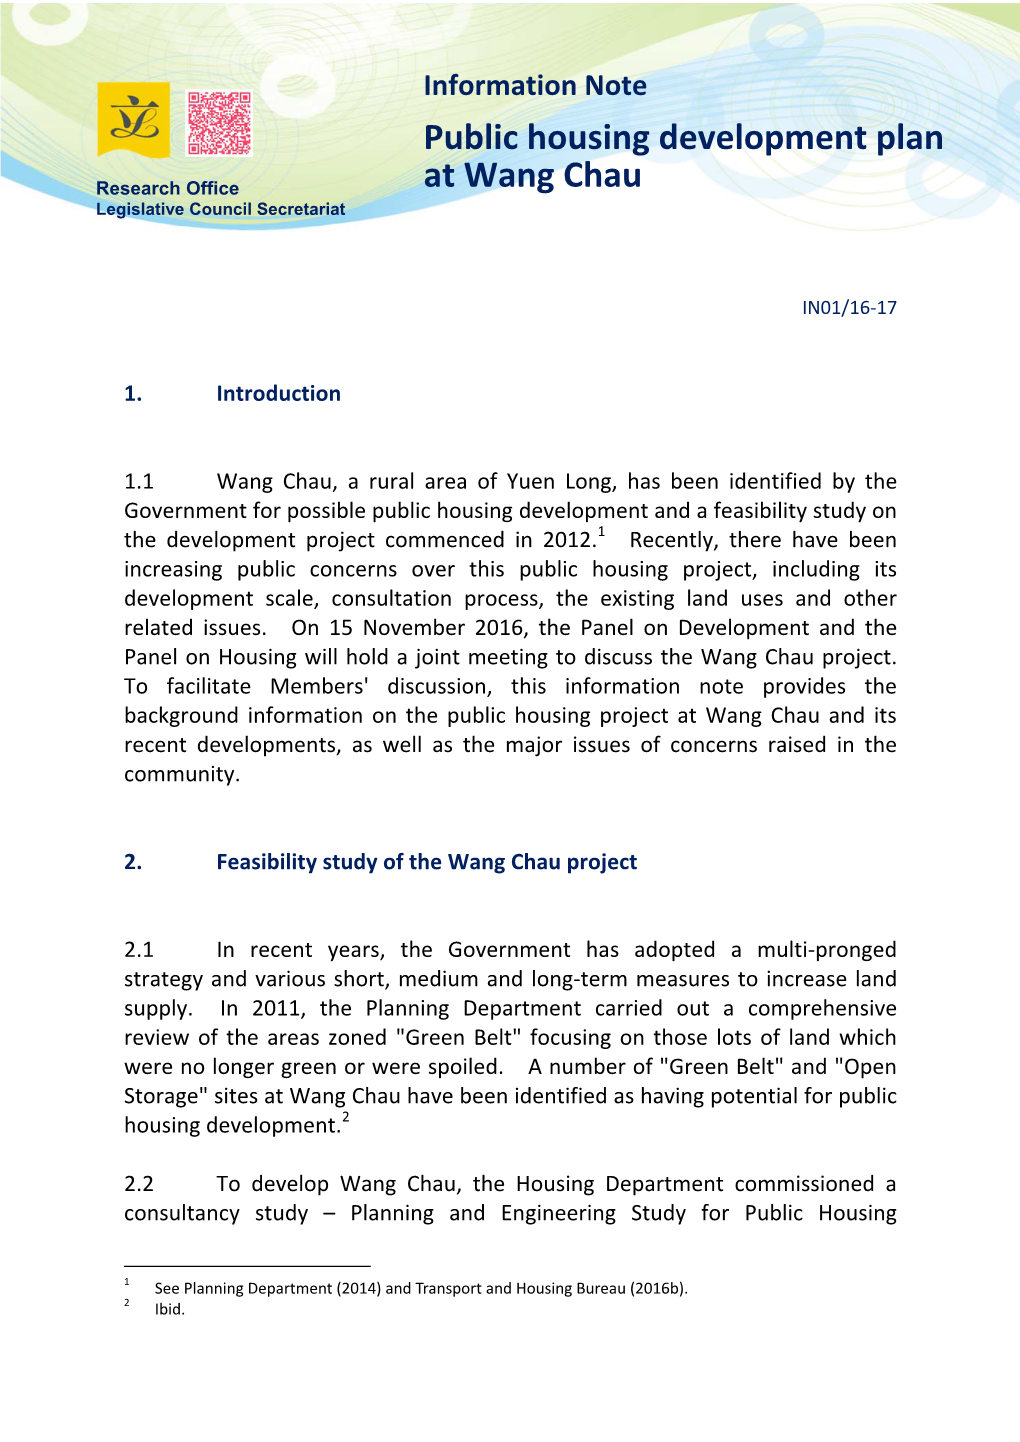 Public Housing Development Plan at Wang Chau